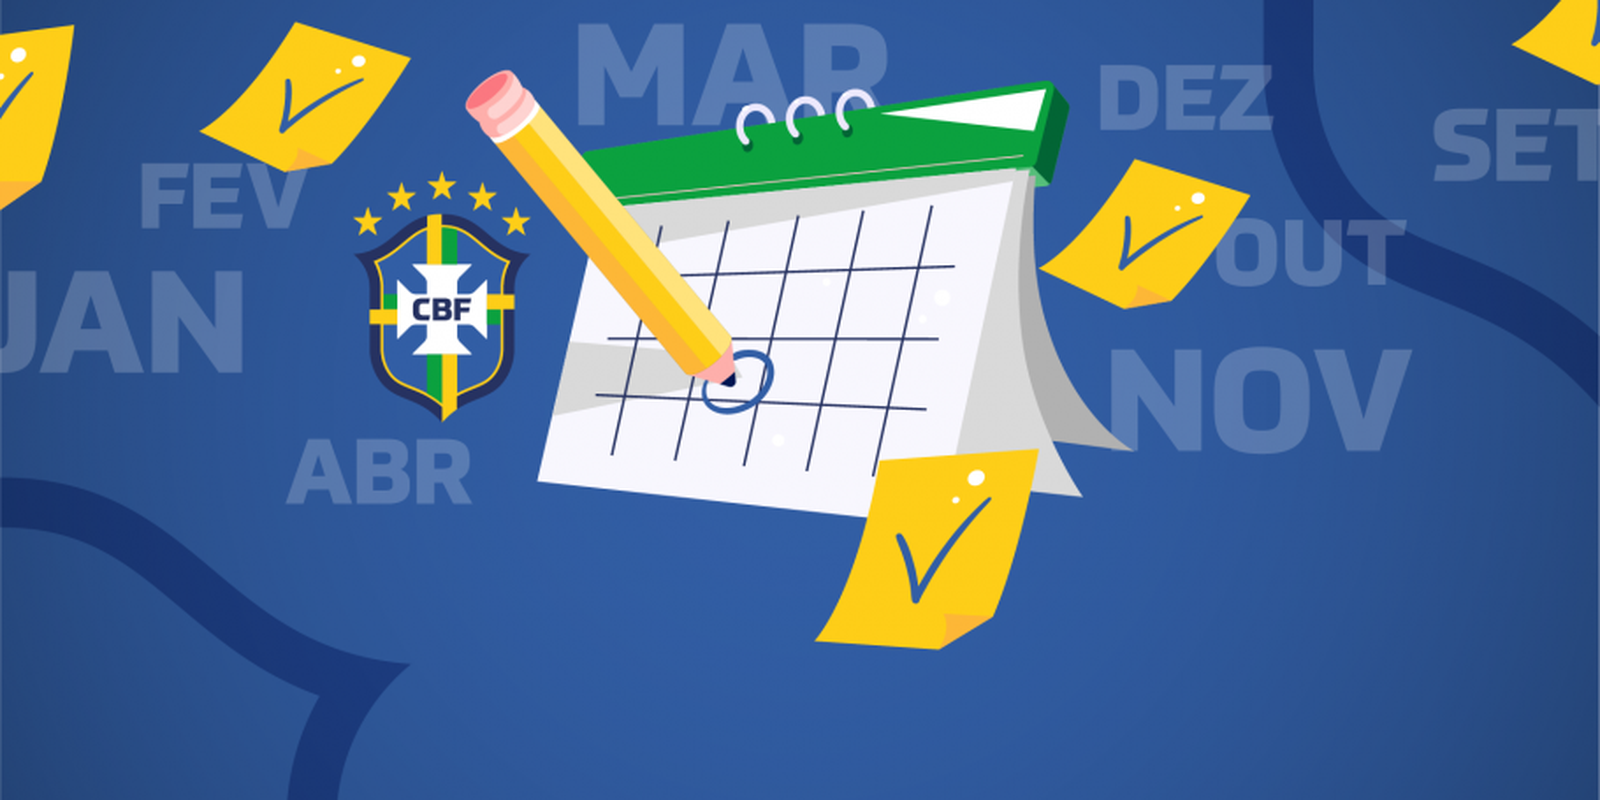 Calendario Da Cbf Para 2021 Inicia Quatro Dias Apos Brasileirao 2020 Agencia Brasil